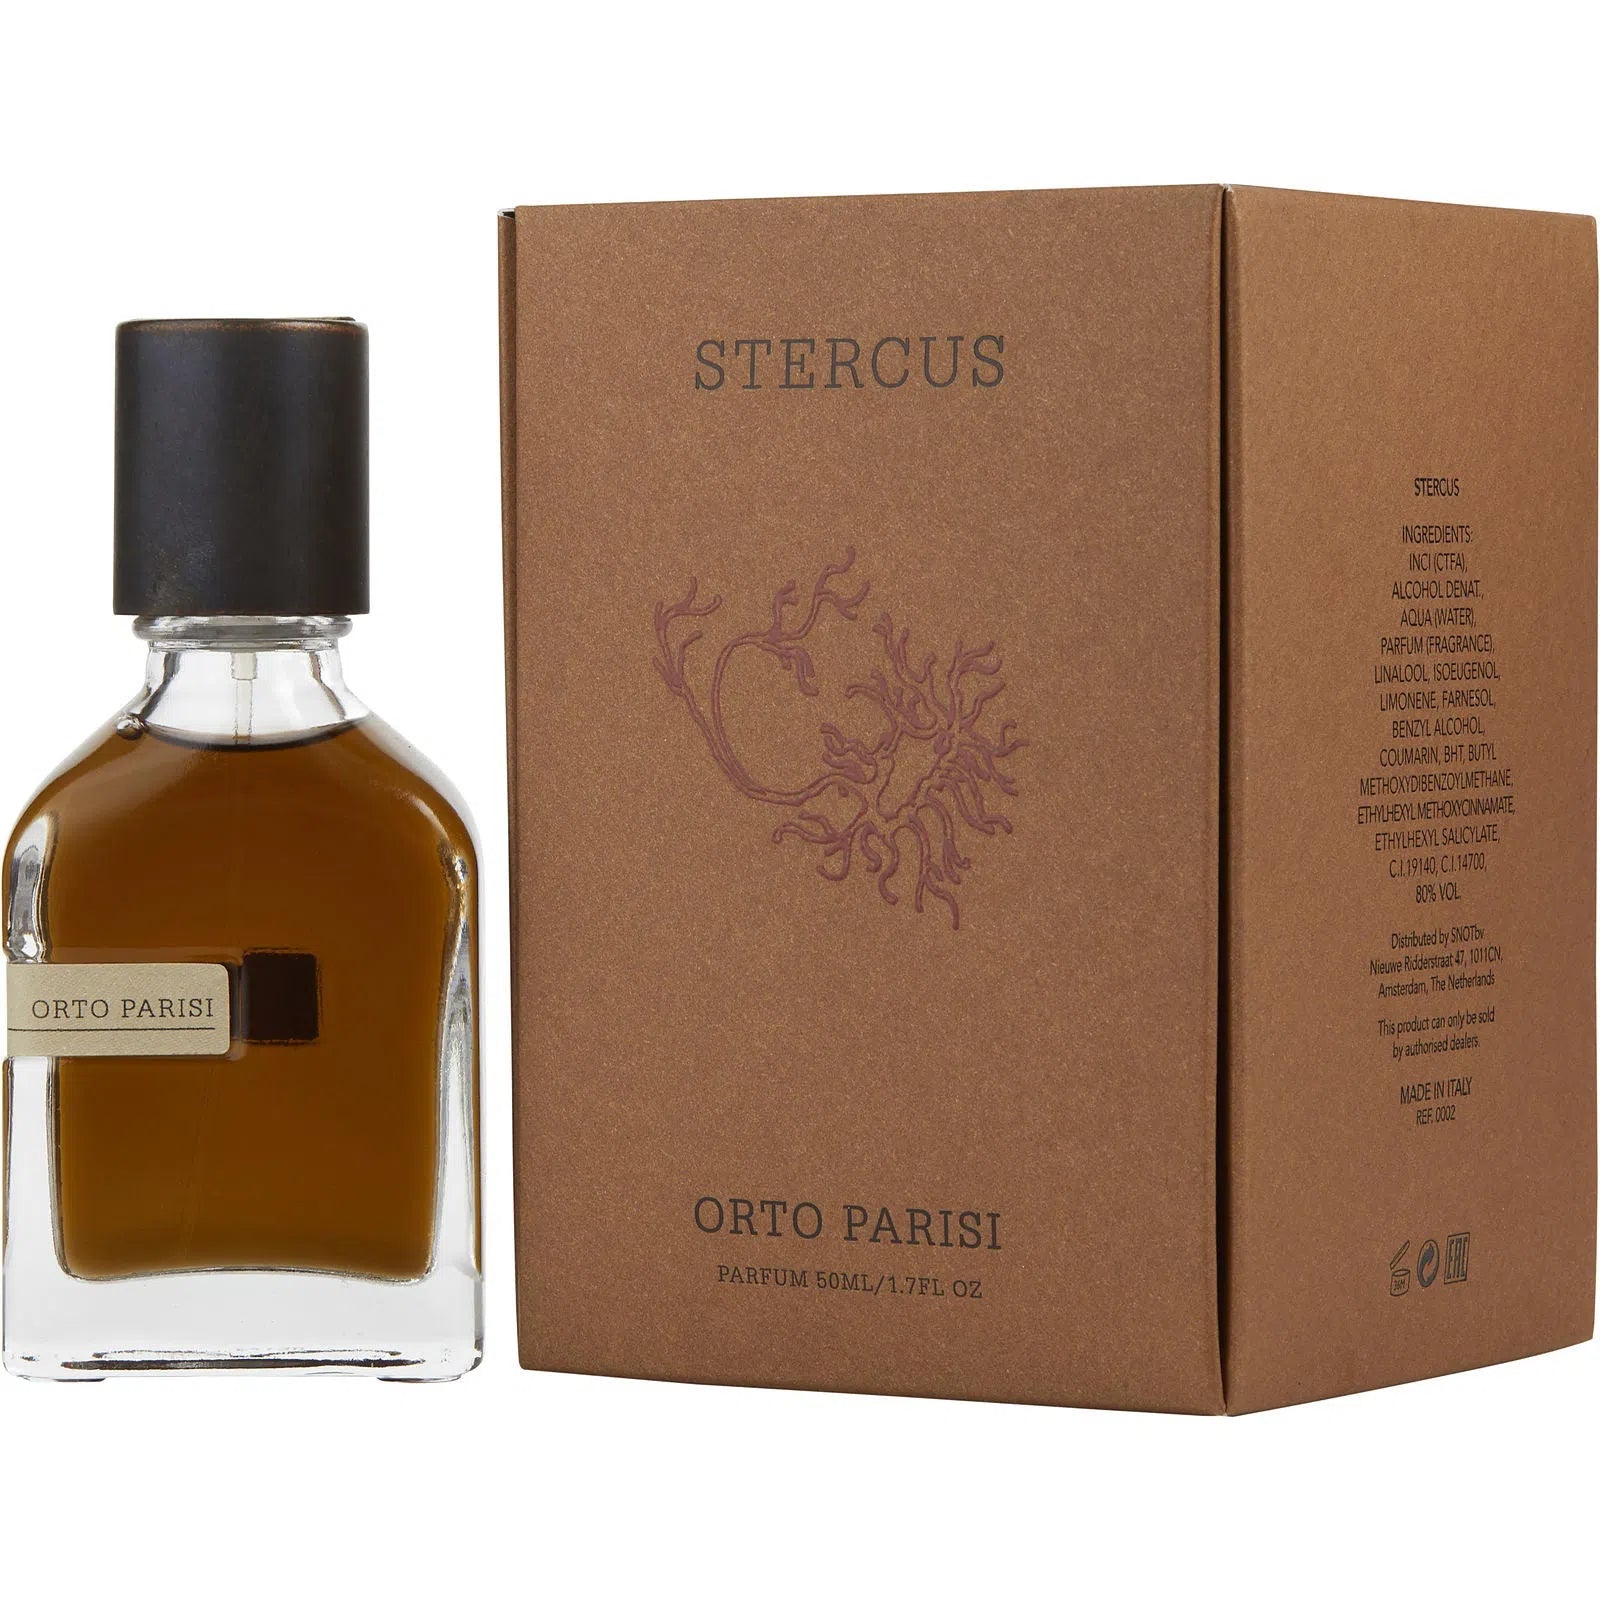 Perfume Orto Parisi Stercus Parfum (U) / 50 ml - 8717774840818- 1 - Prive Perfumes Honduras